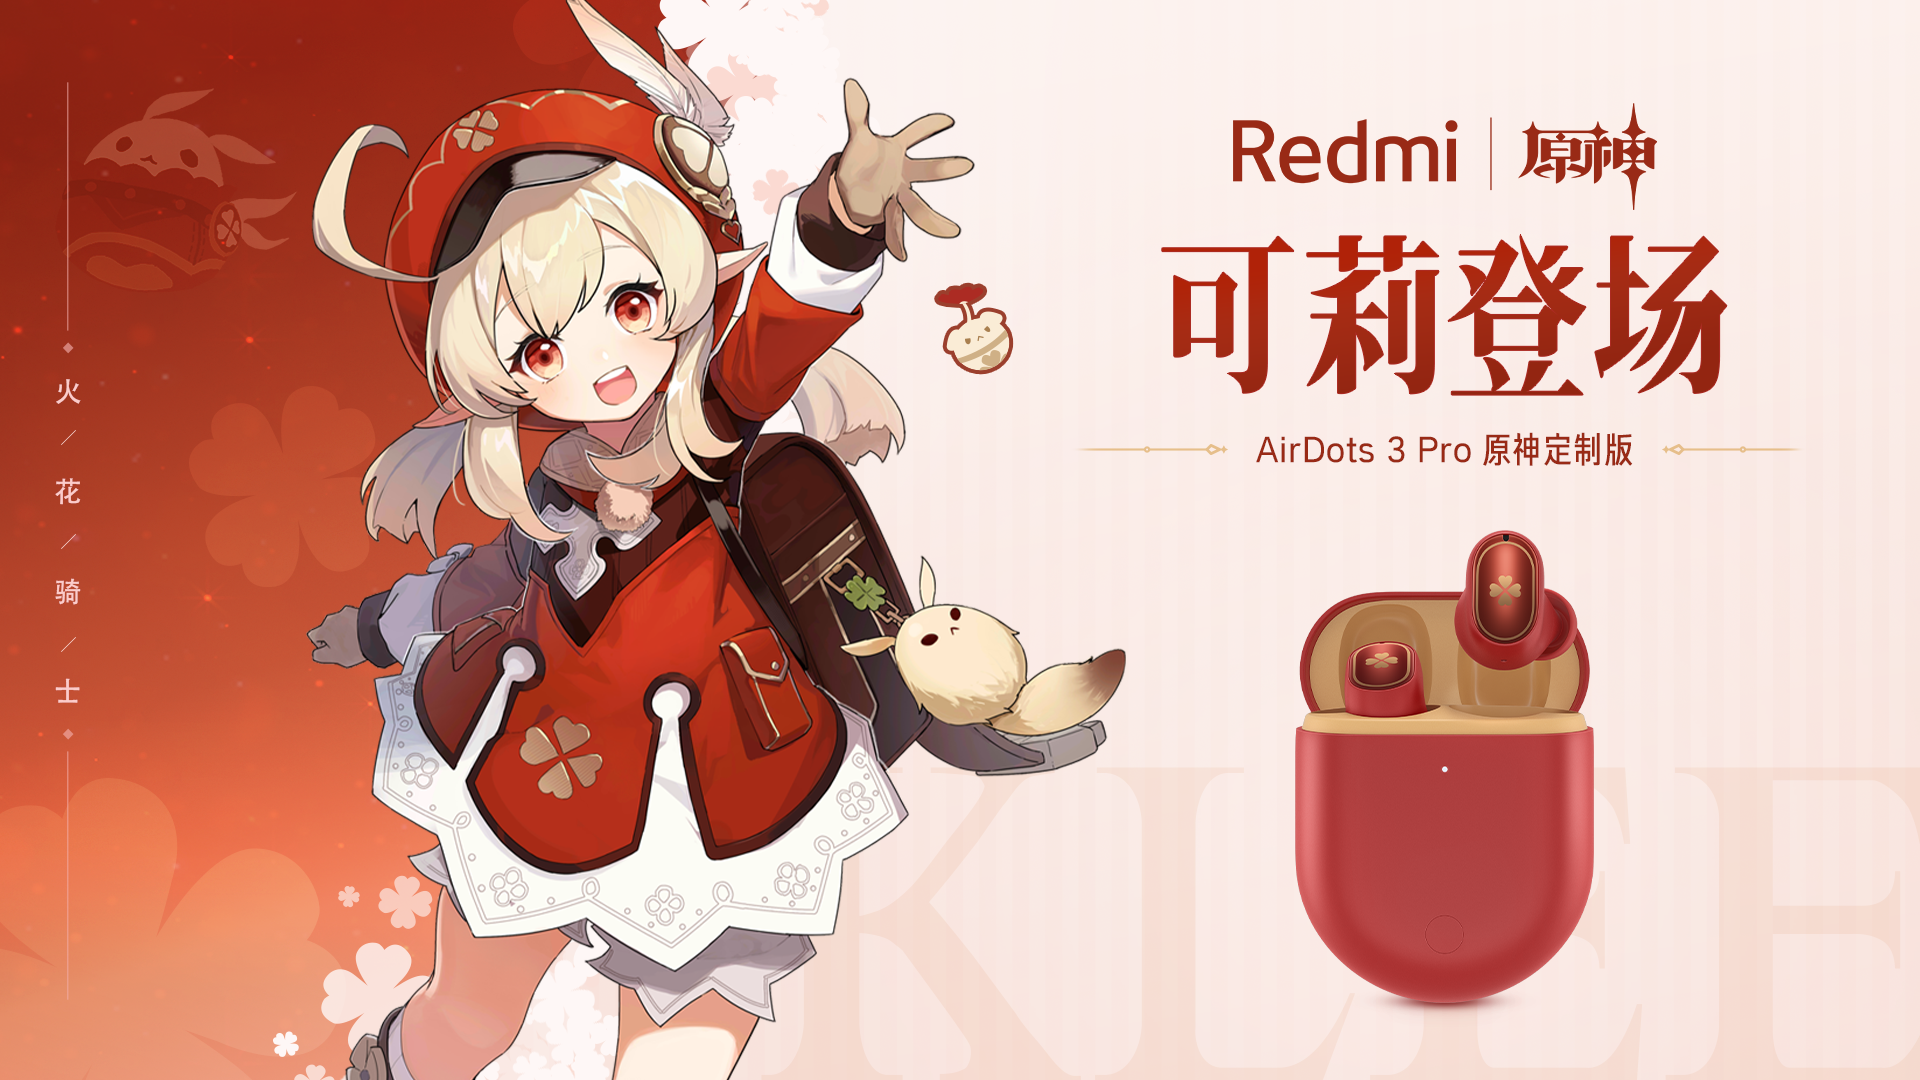 Redmi × 原神打造首款联名定制耳机